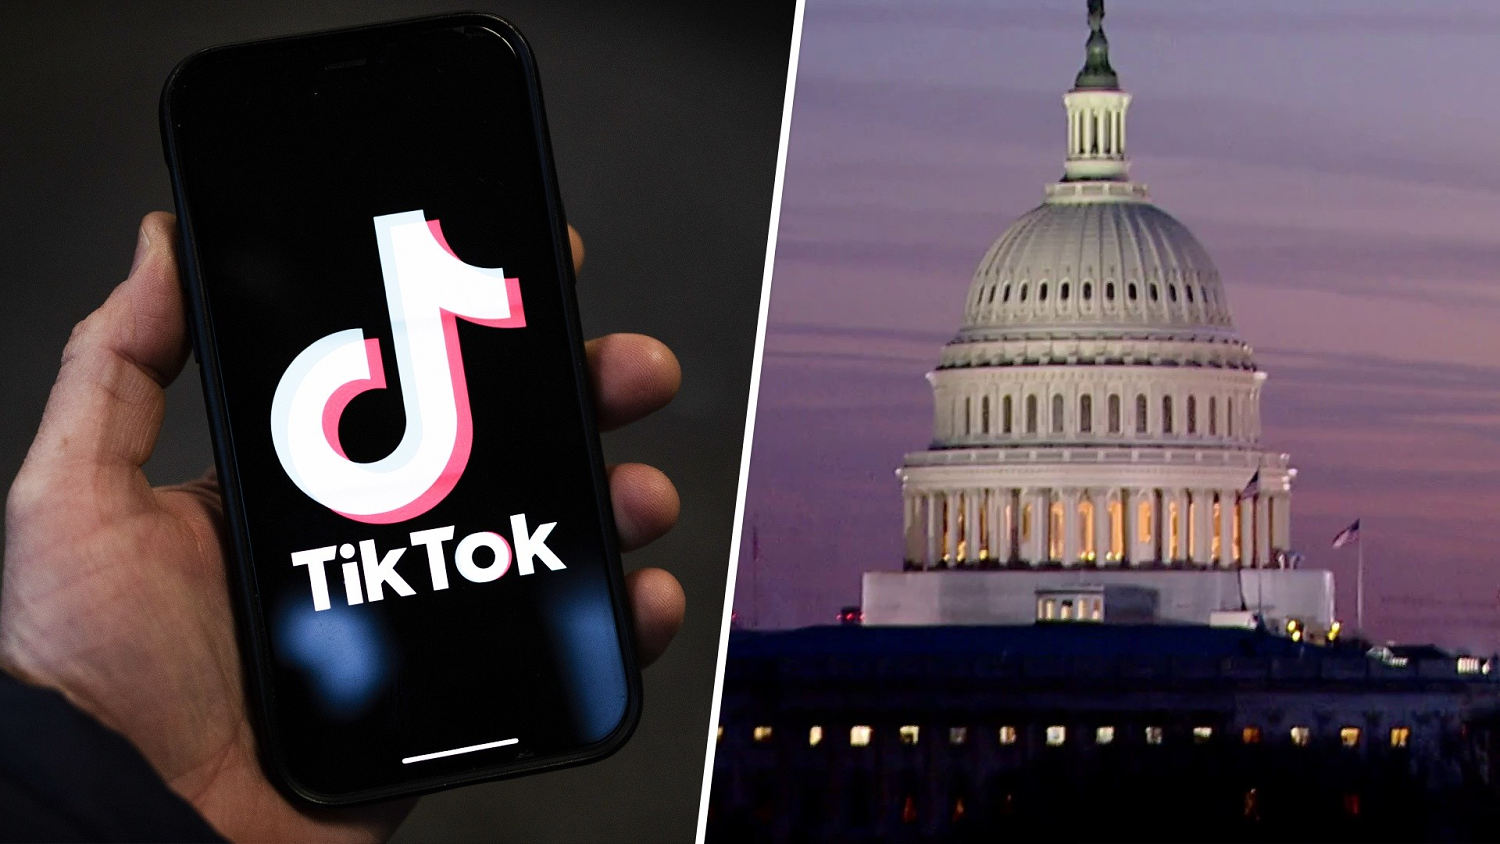 TikTok files lawsuit calling potential US ban ‘unconstitutional’